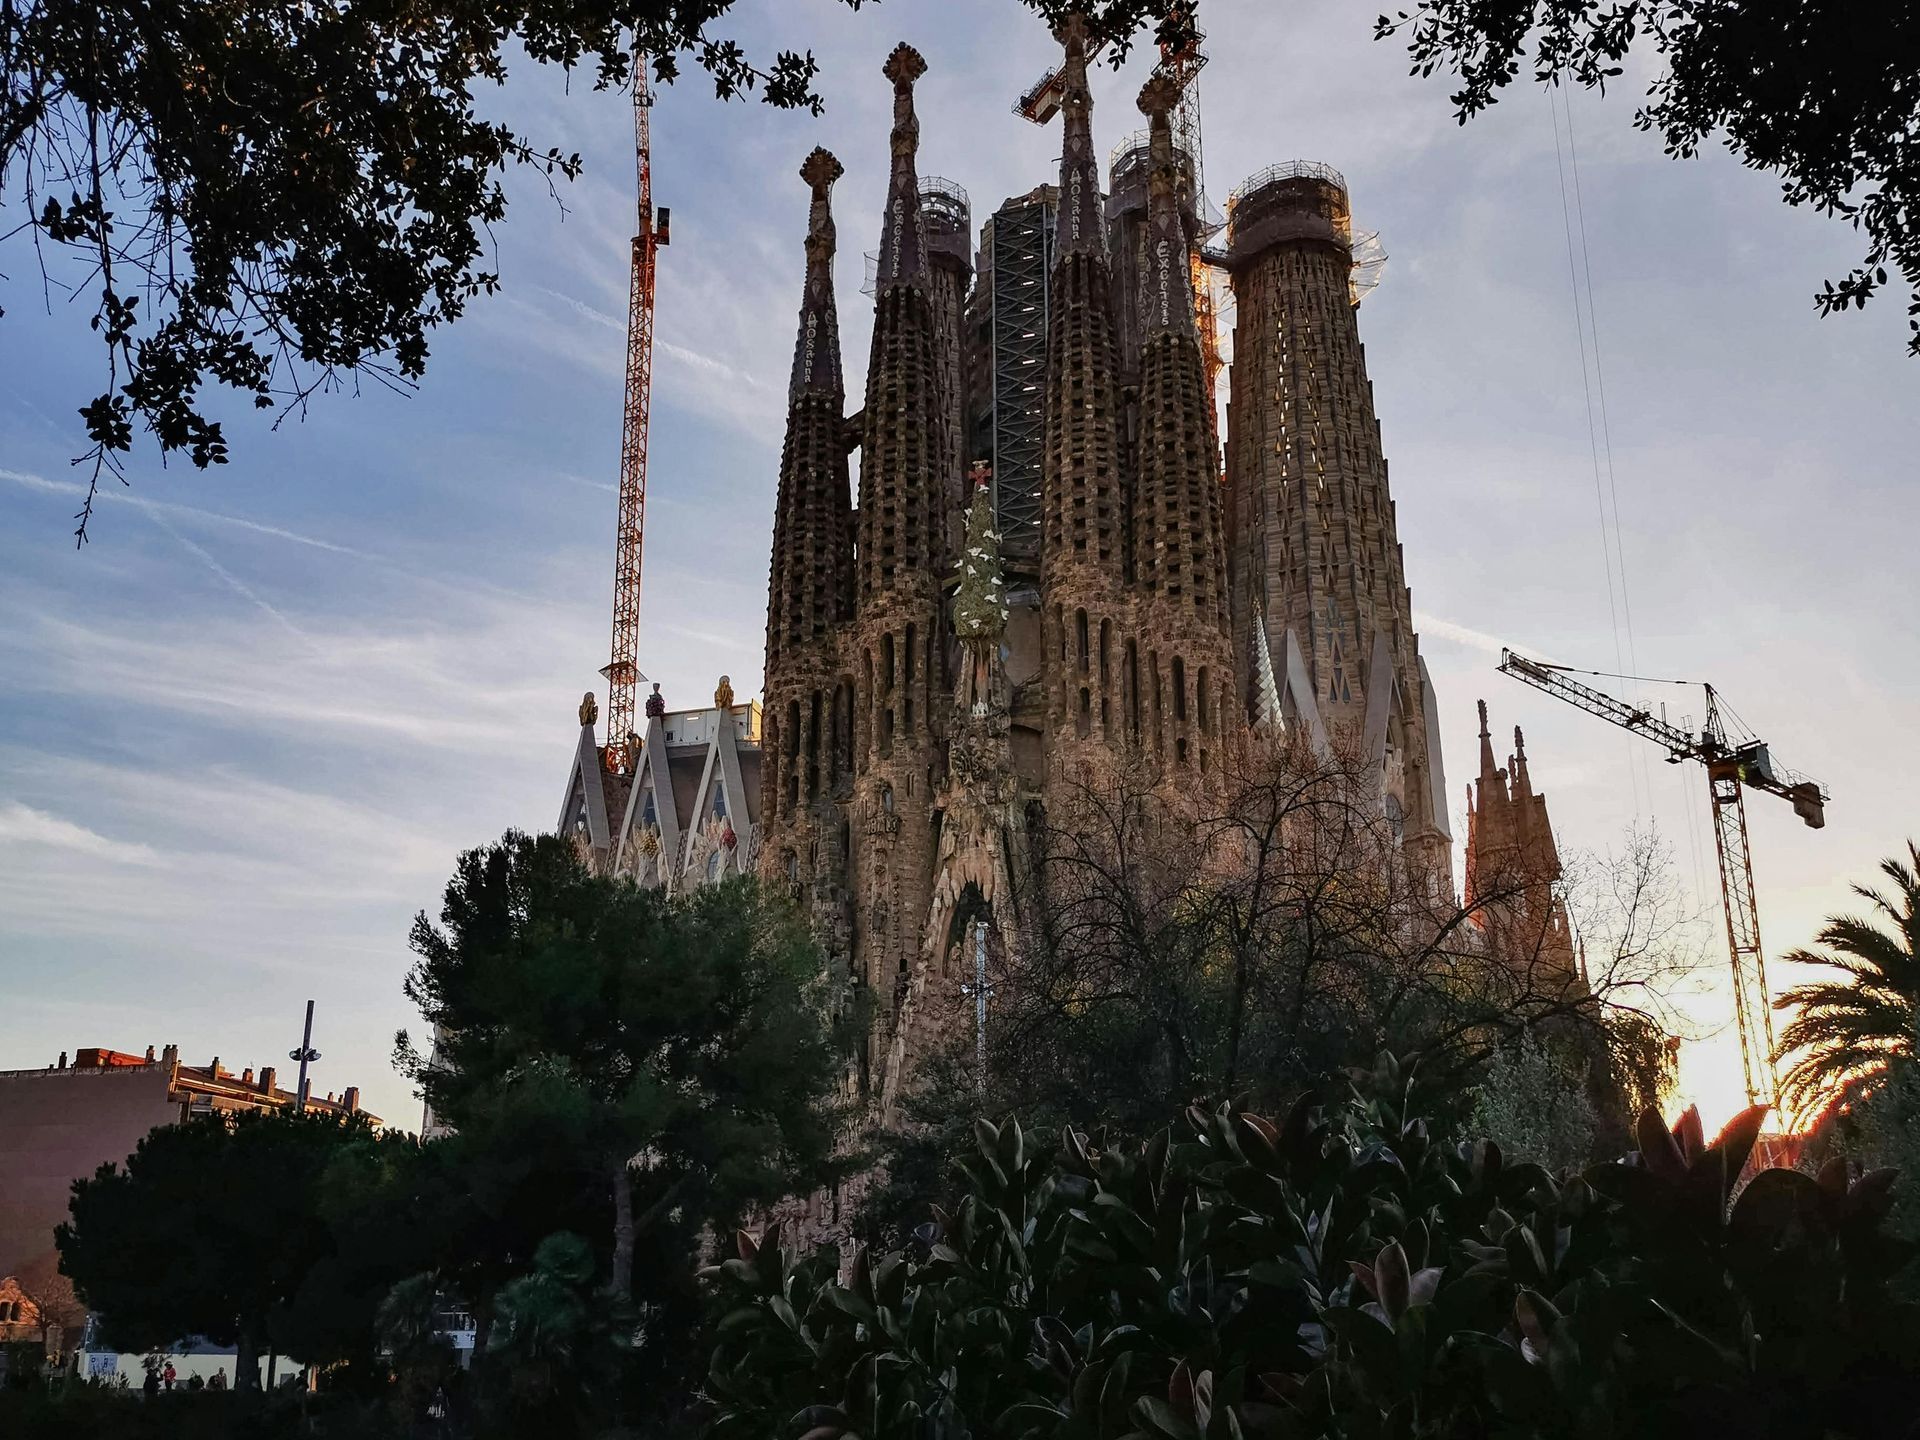 Barcelona's Sagrada Familia